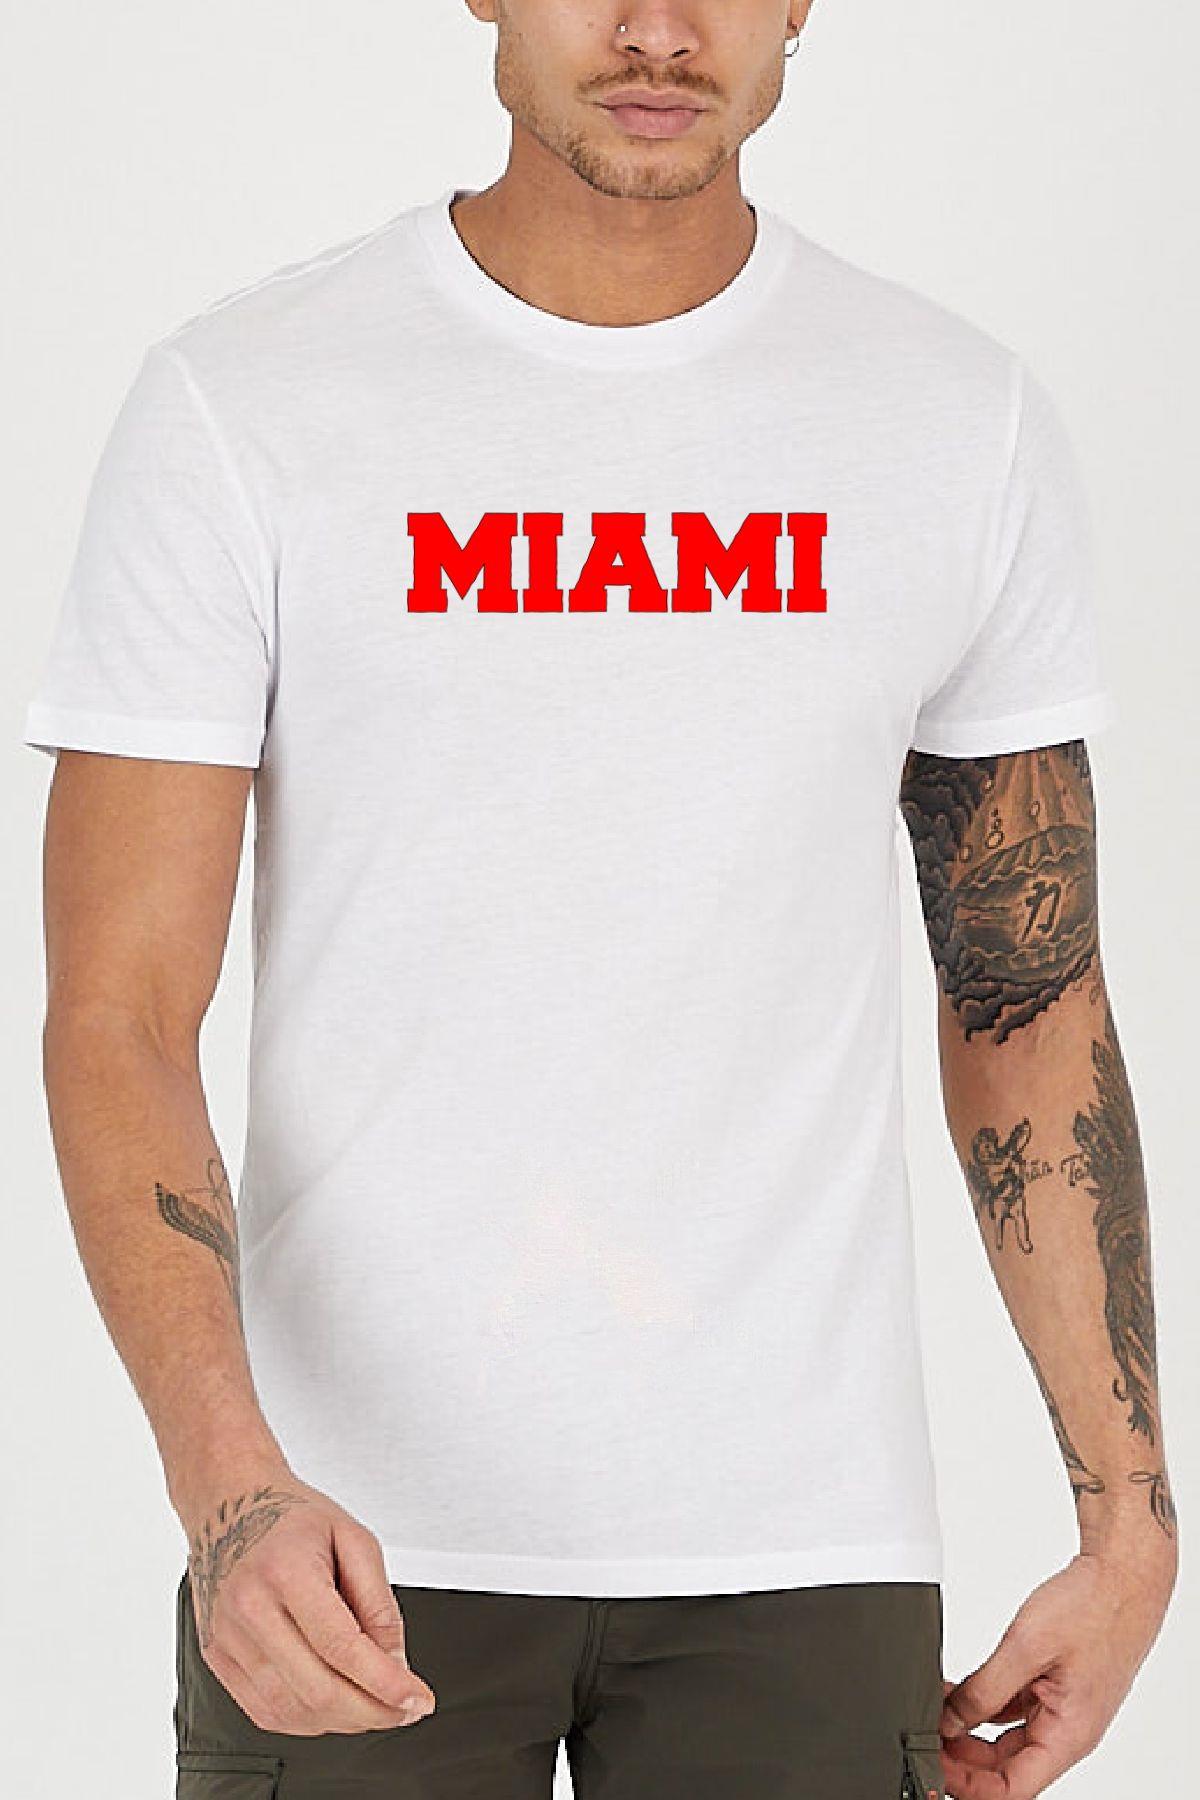 Miami slogan printed Crew Neck men's t -shirt